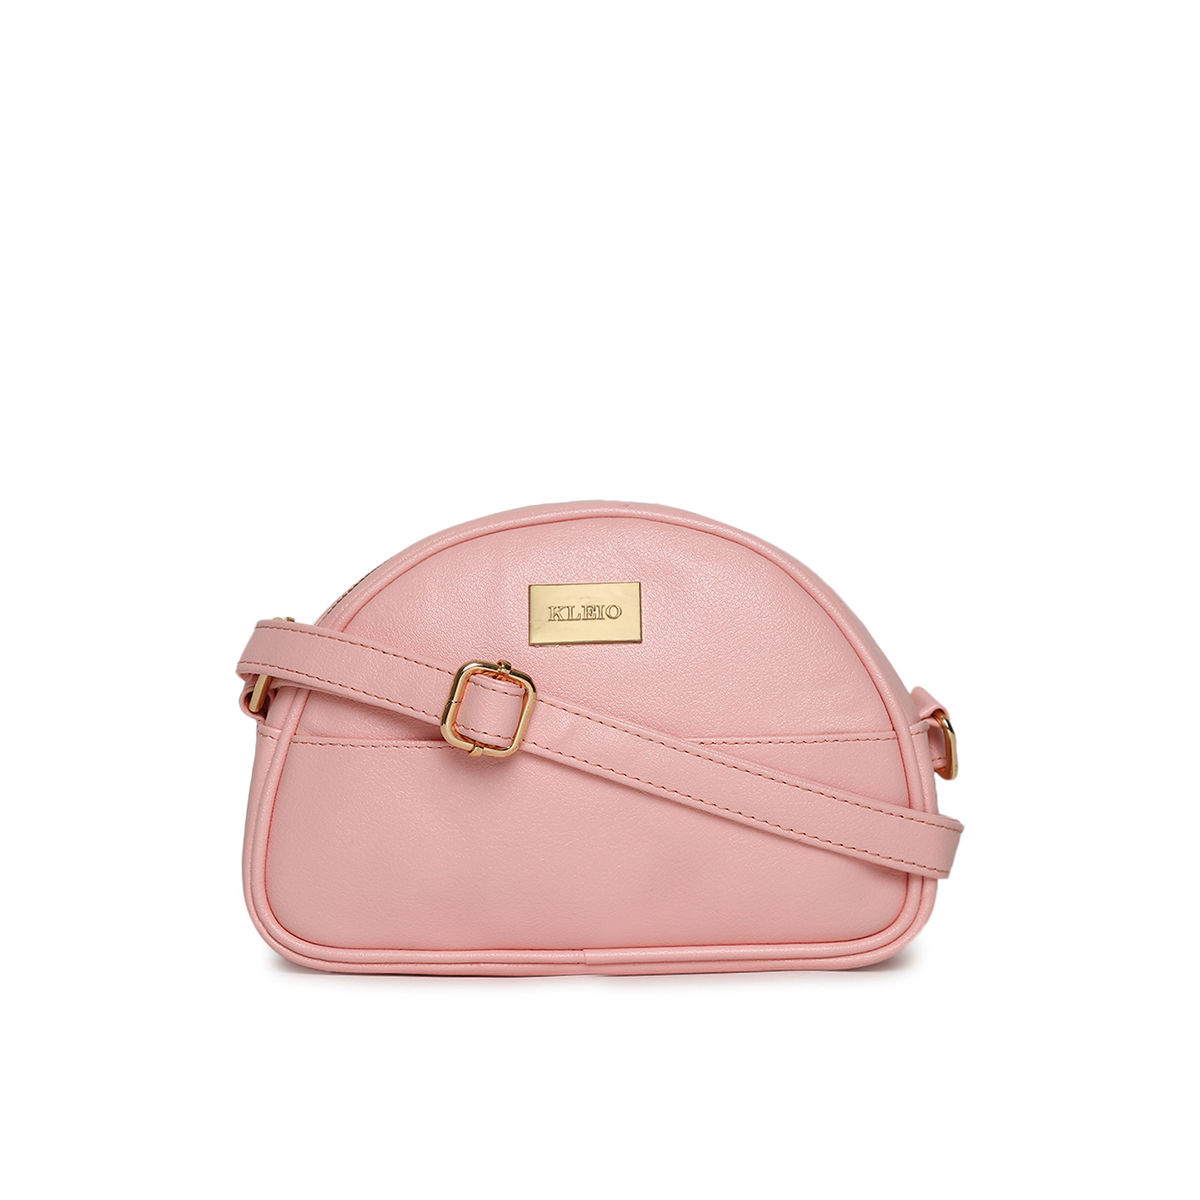 Women Tote Bag Tassels Leather Shoulder Female Handbags - Pink - Walmart.com